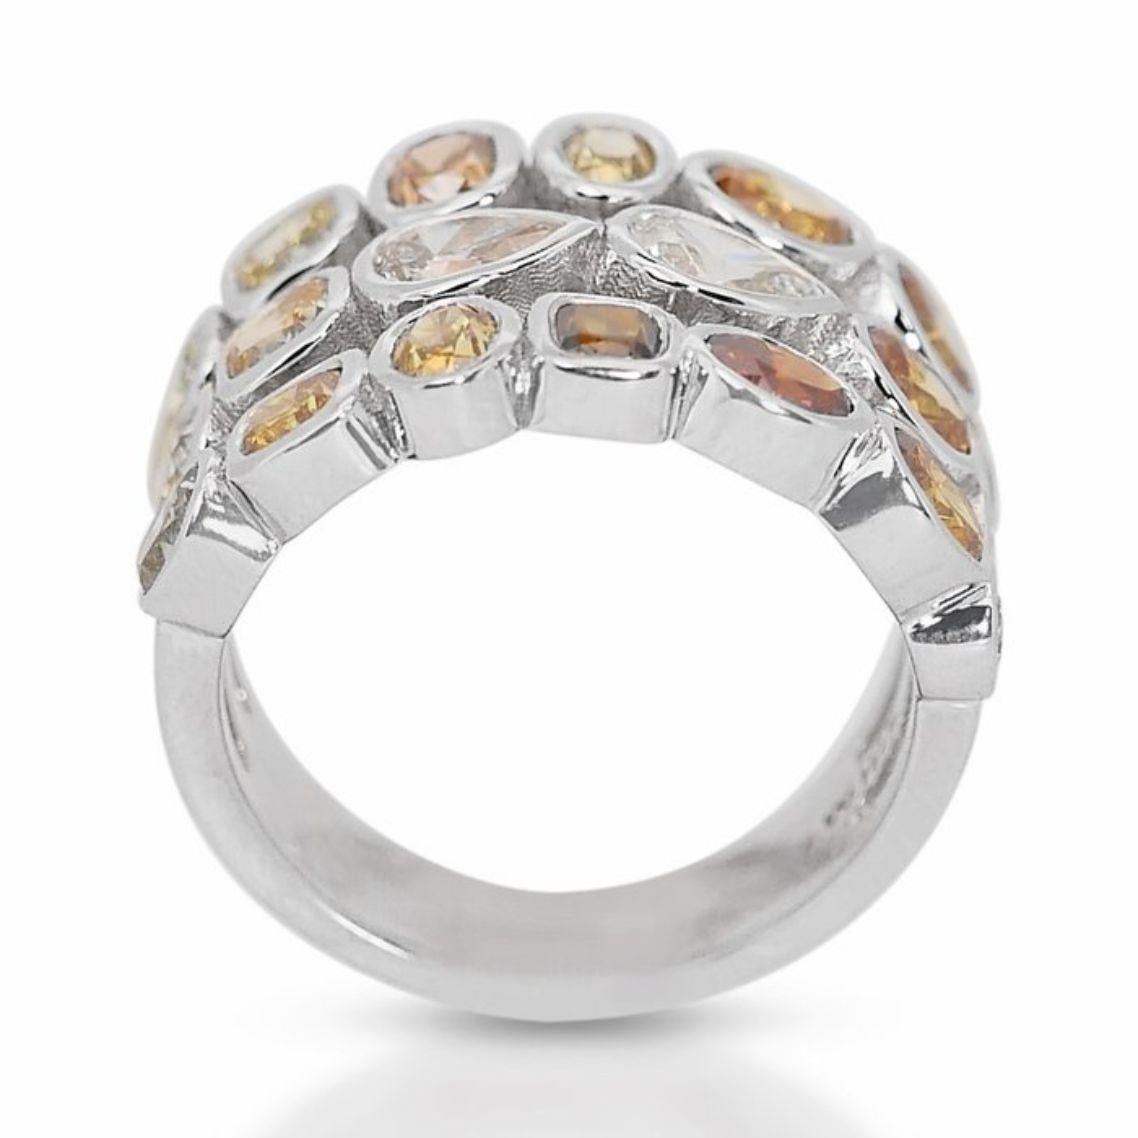 Women's A Rainbow of Sparkling Gems: 3.68ct Diamond Ring